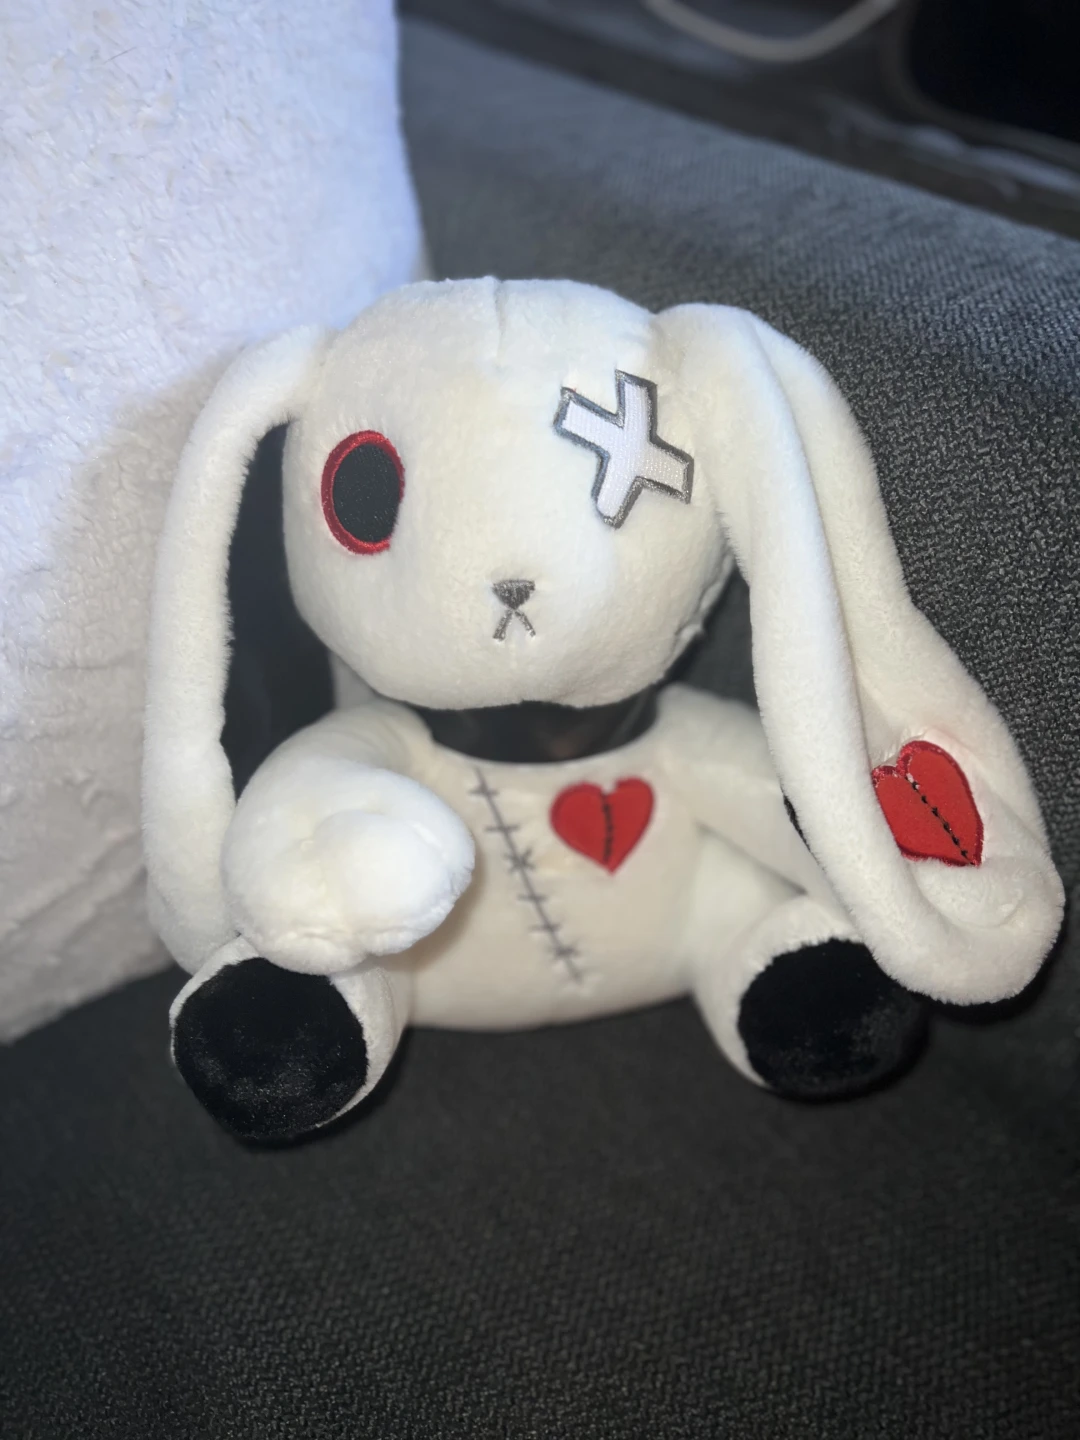 Attatoy E-Girl Bunny Plush, Anime Goth Stuffed Animal for Teens